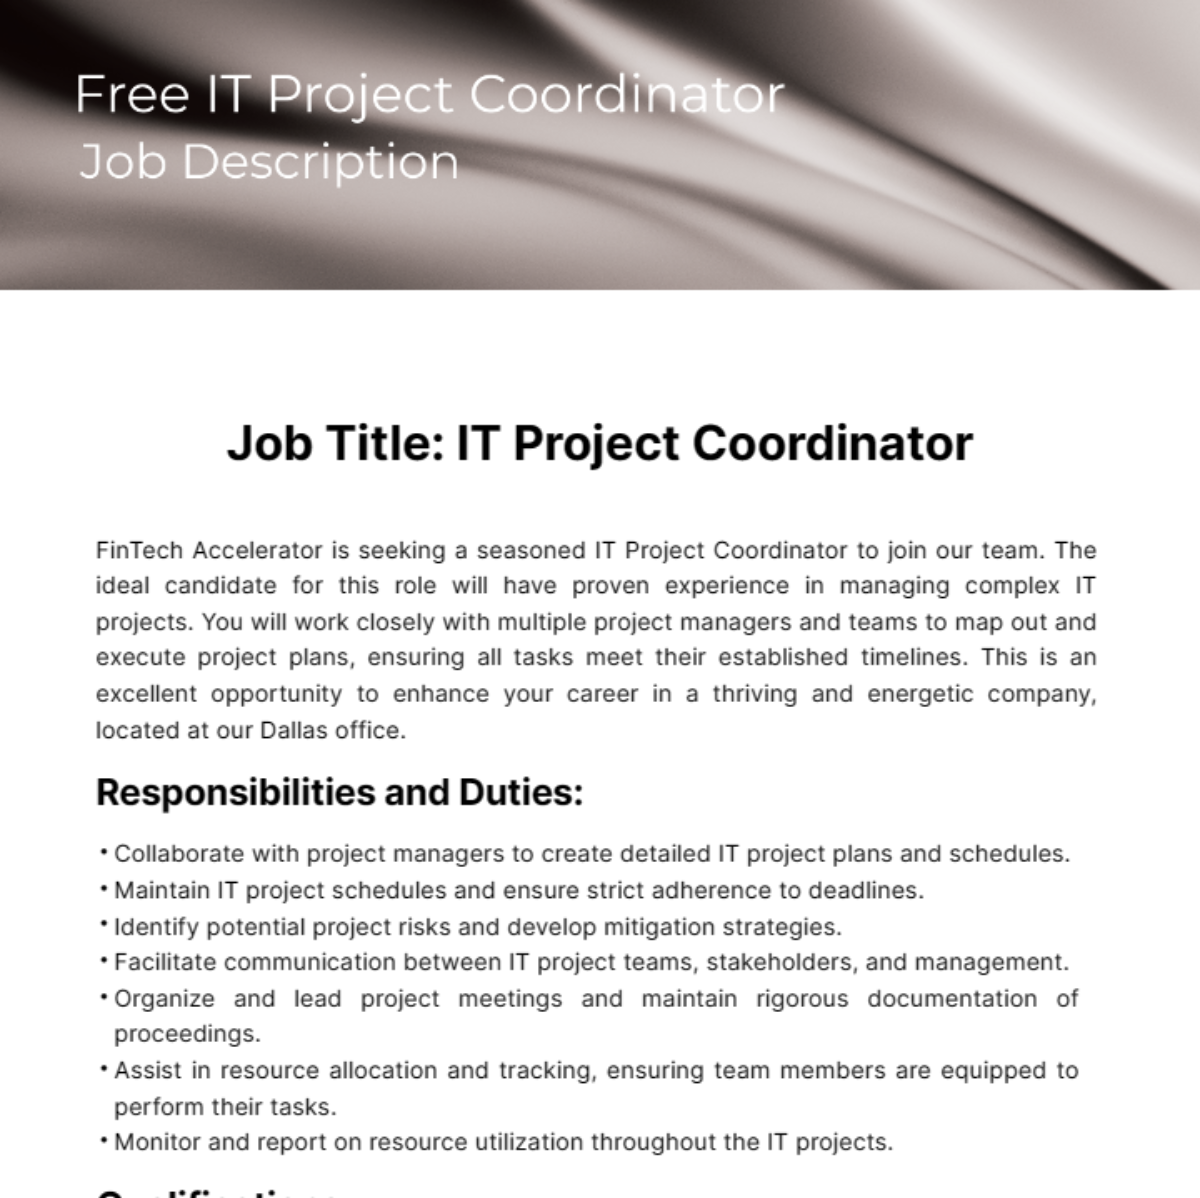 Free IT Project Coordinator Job Description Template